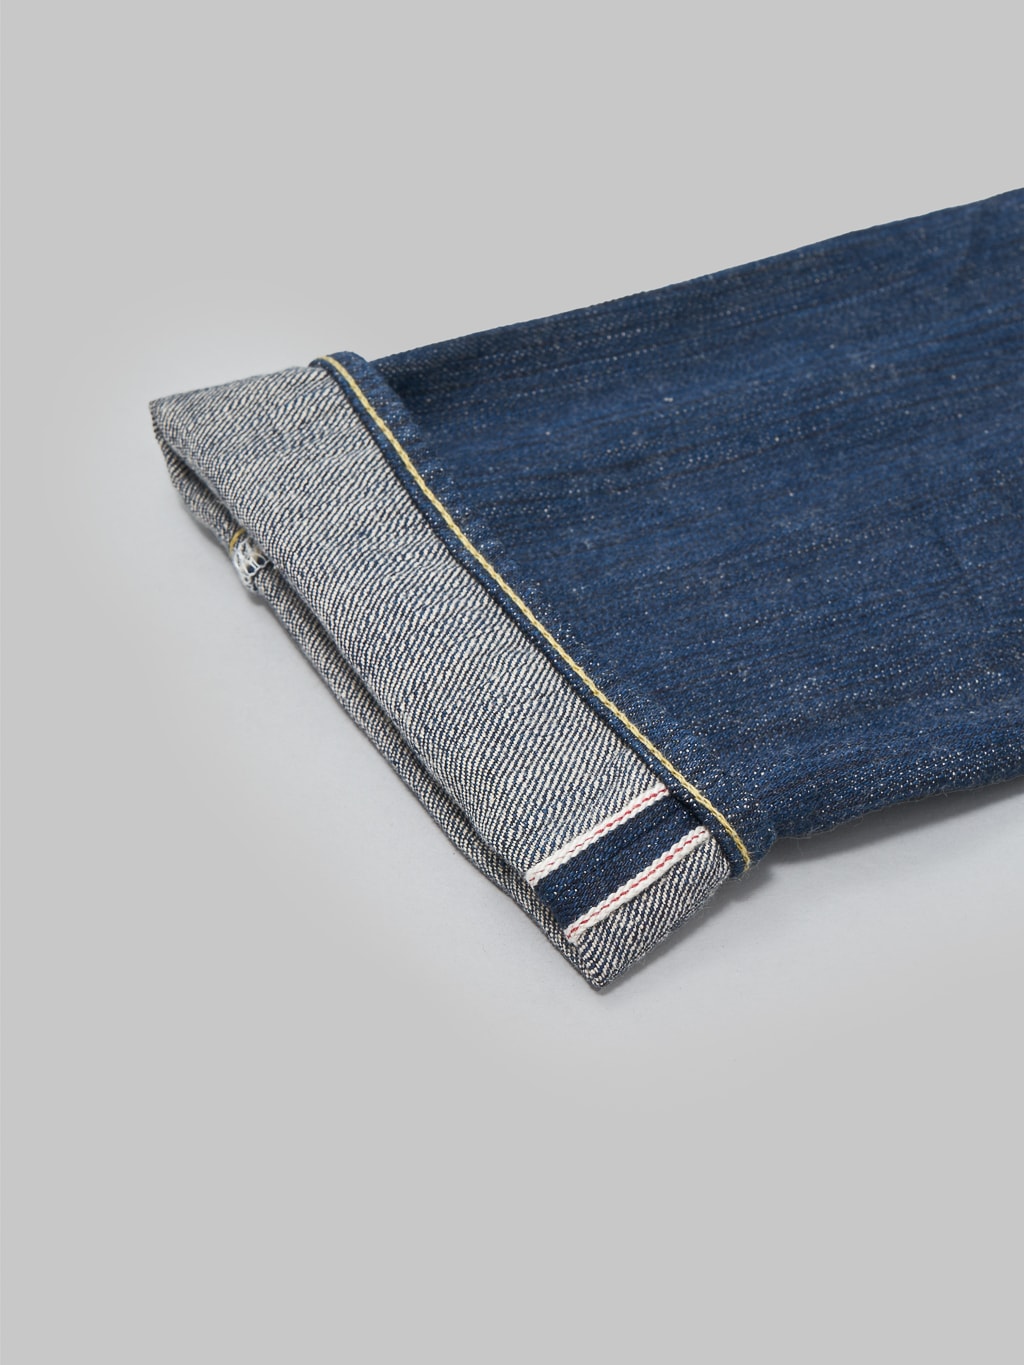 Oni denim kiwami indigo regular selvedge jeans chain stitching